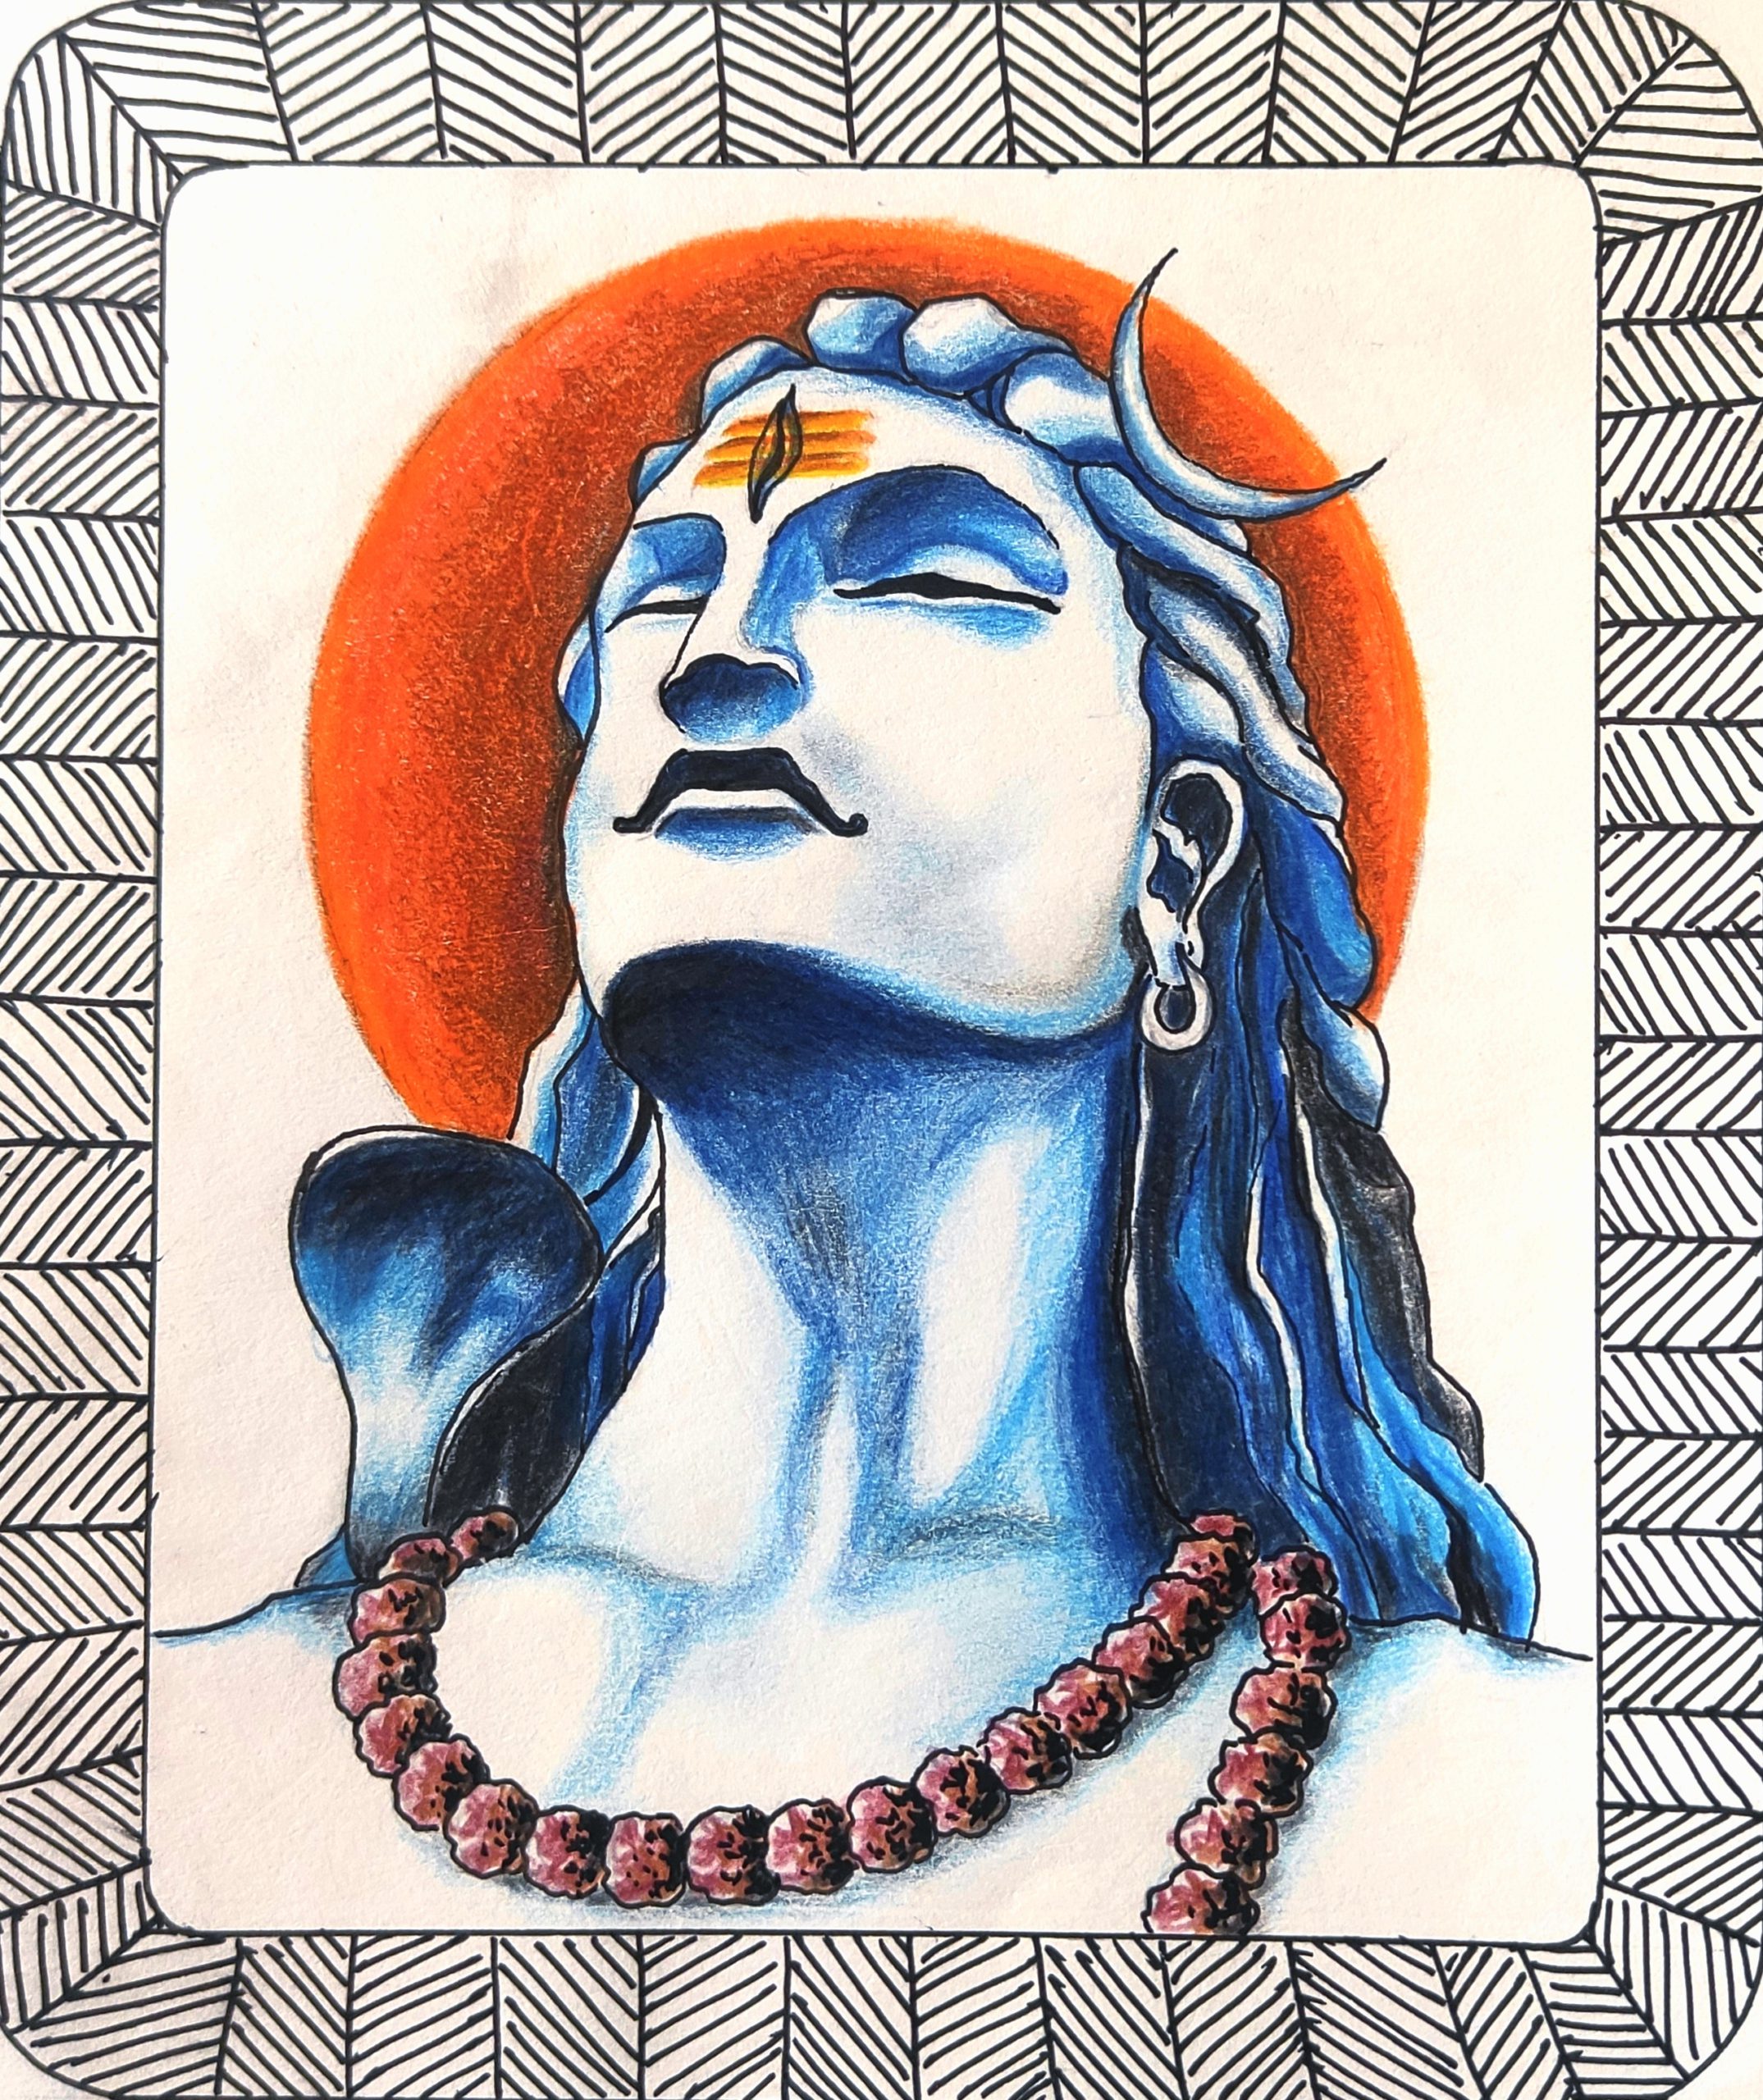 God shiva drawing and colouring || Lord shiva drawing - YouTube